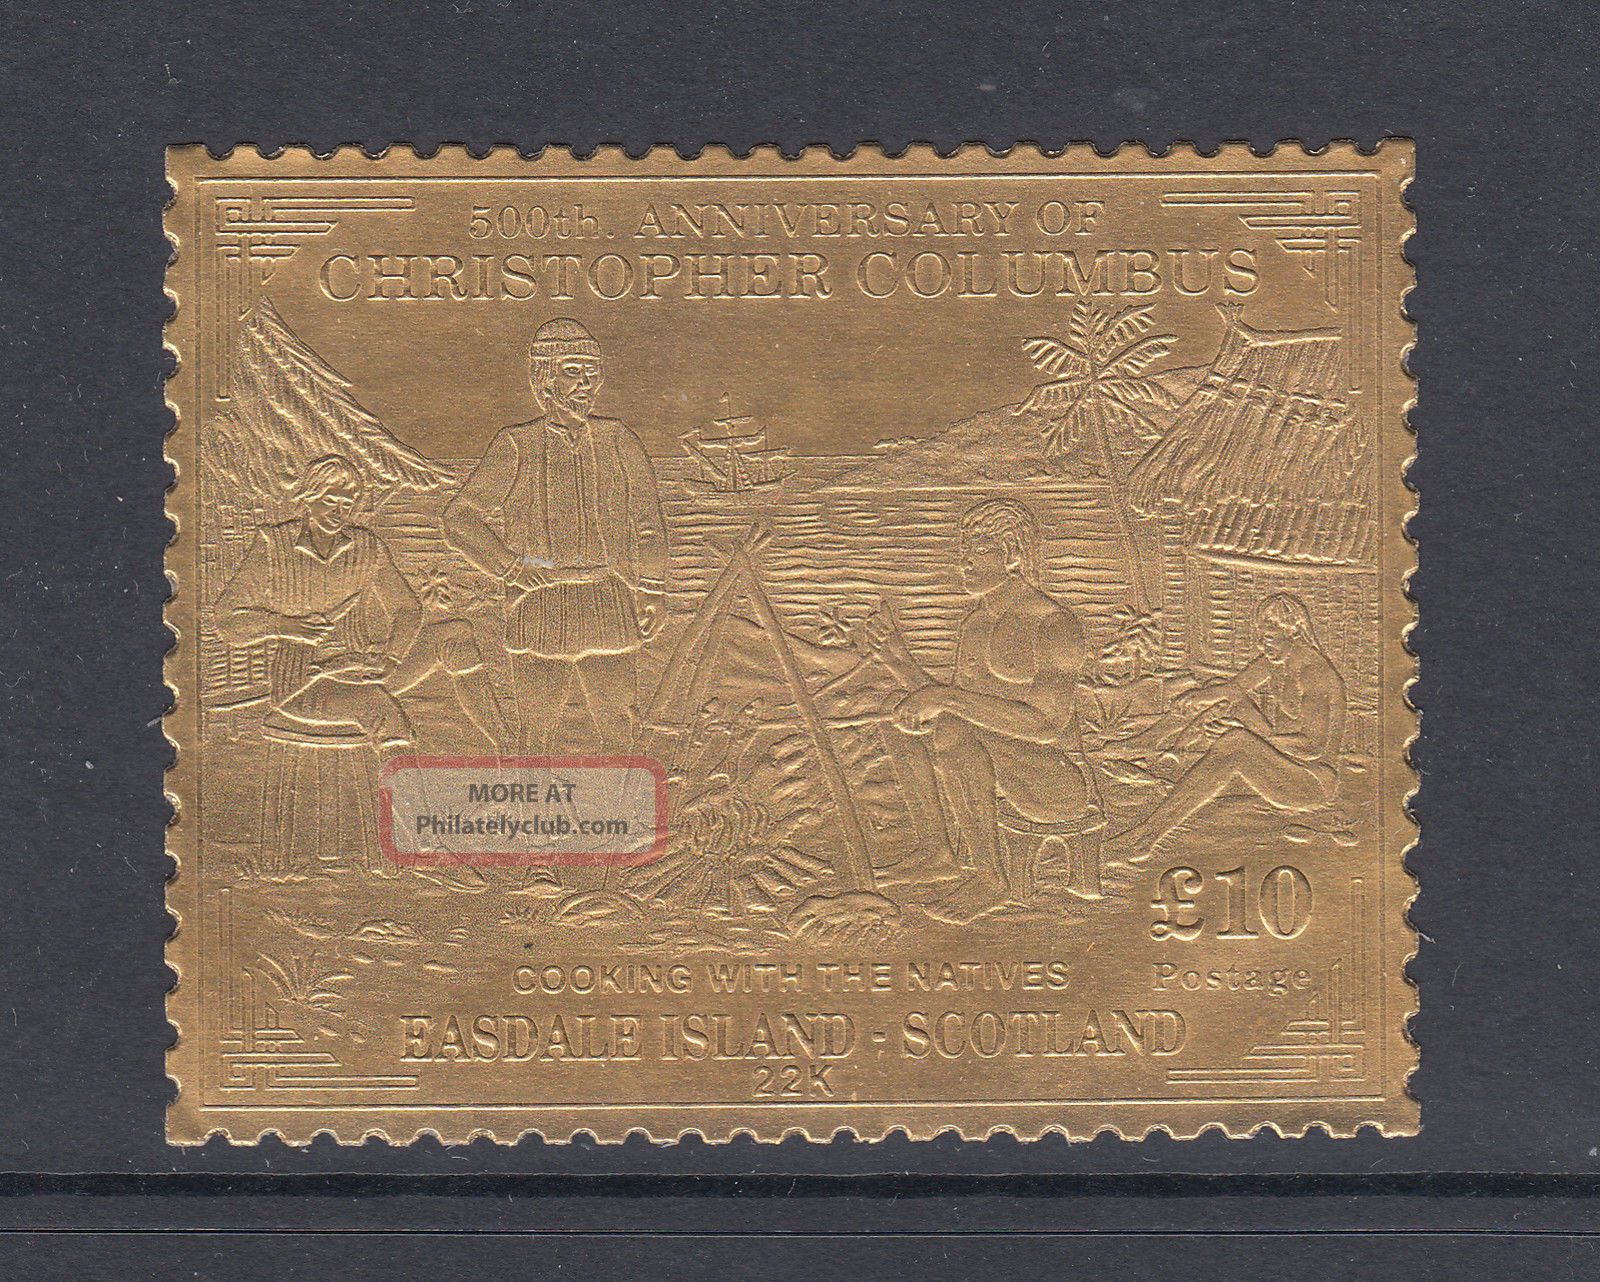 1992 Gb Easdale Island Um/m 22k £10 Stamp - Christopher Columbus Great Britain photo